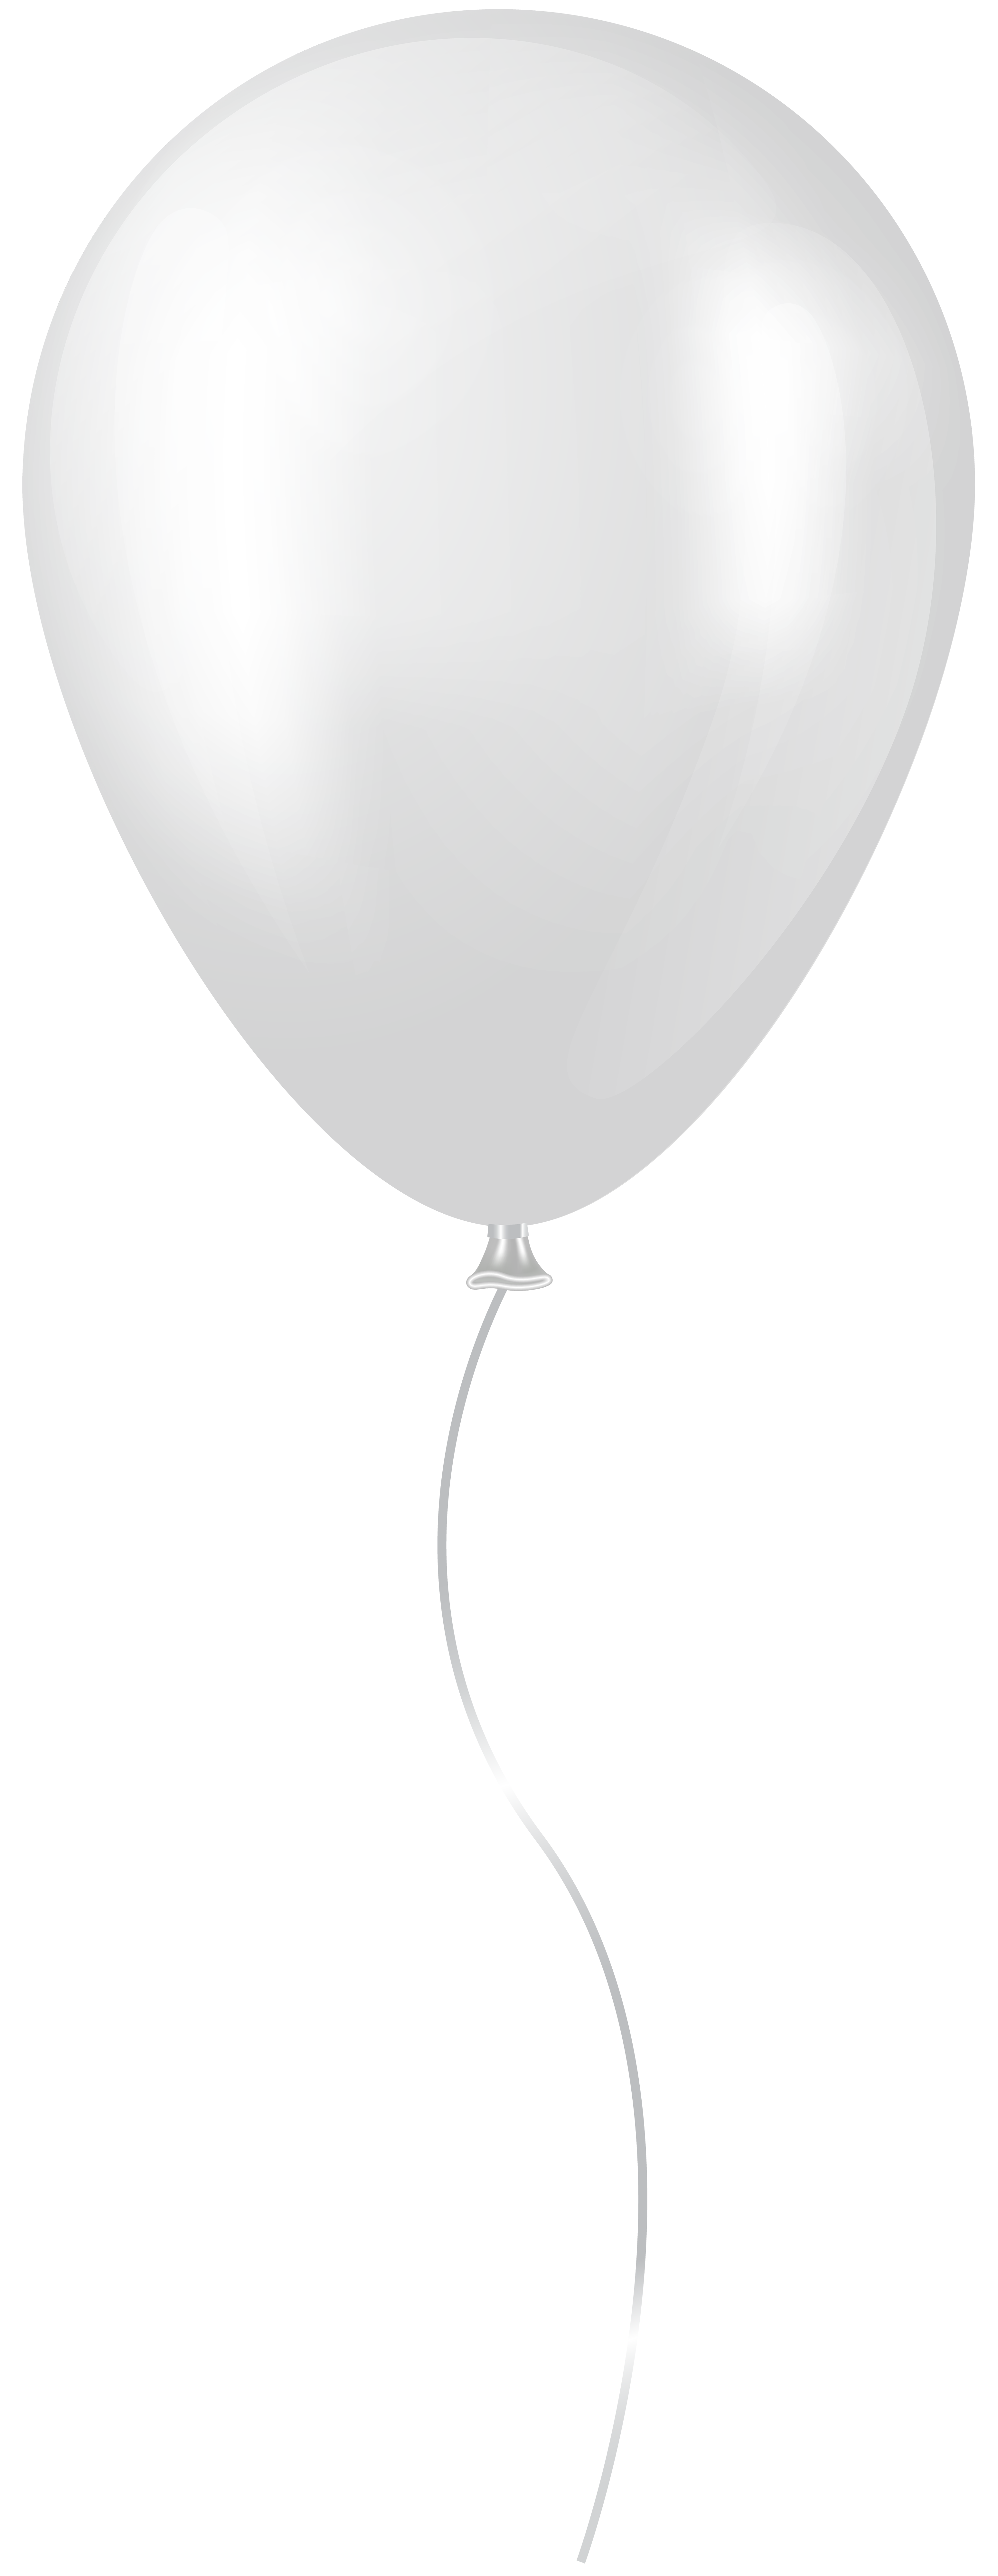 White Balloon Transparent Clip Art | Gallery Yopriceville - High ...